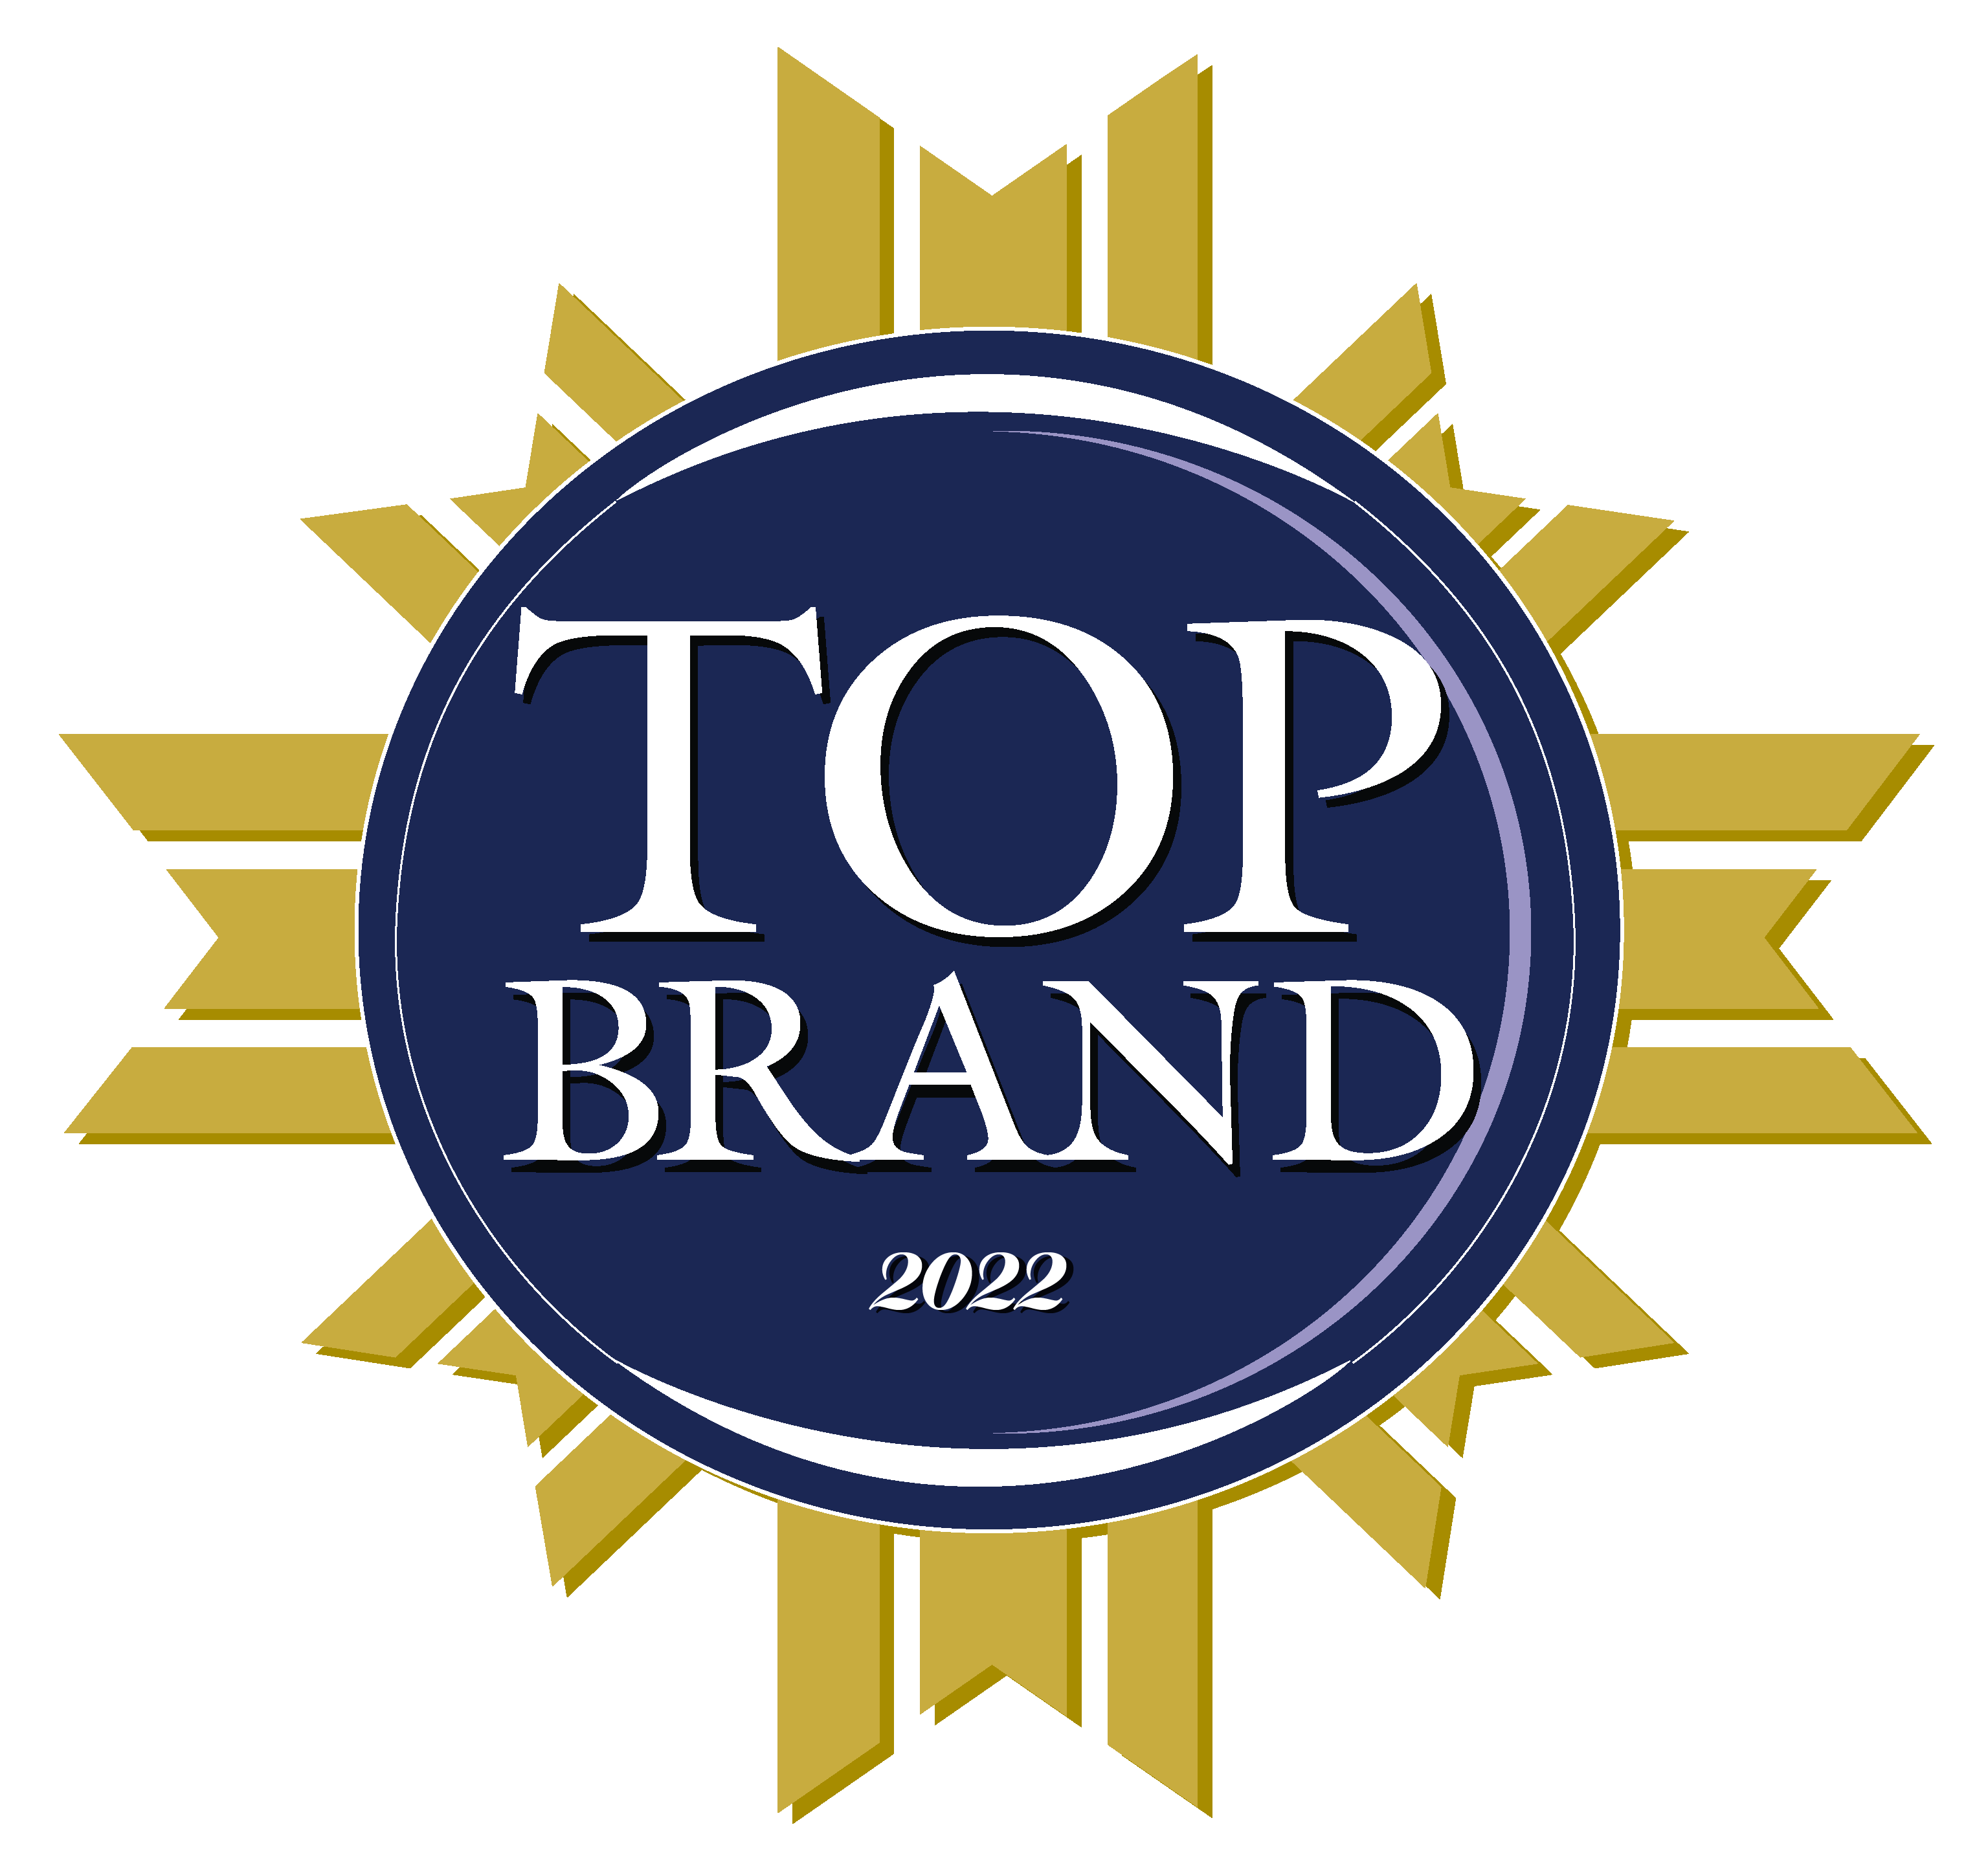 Top Brands Award 2022